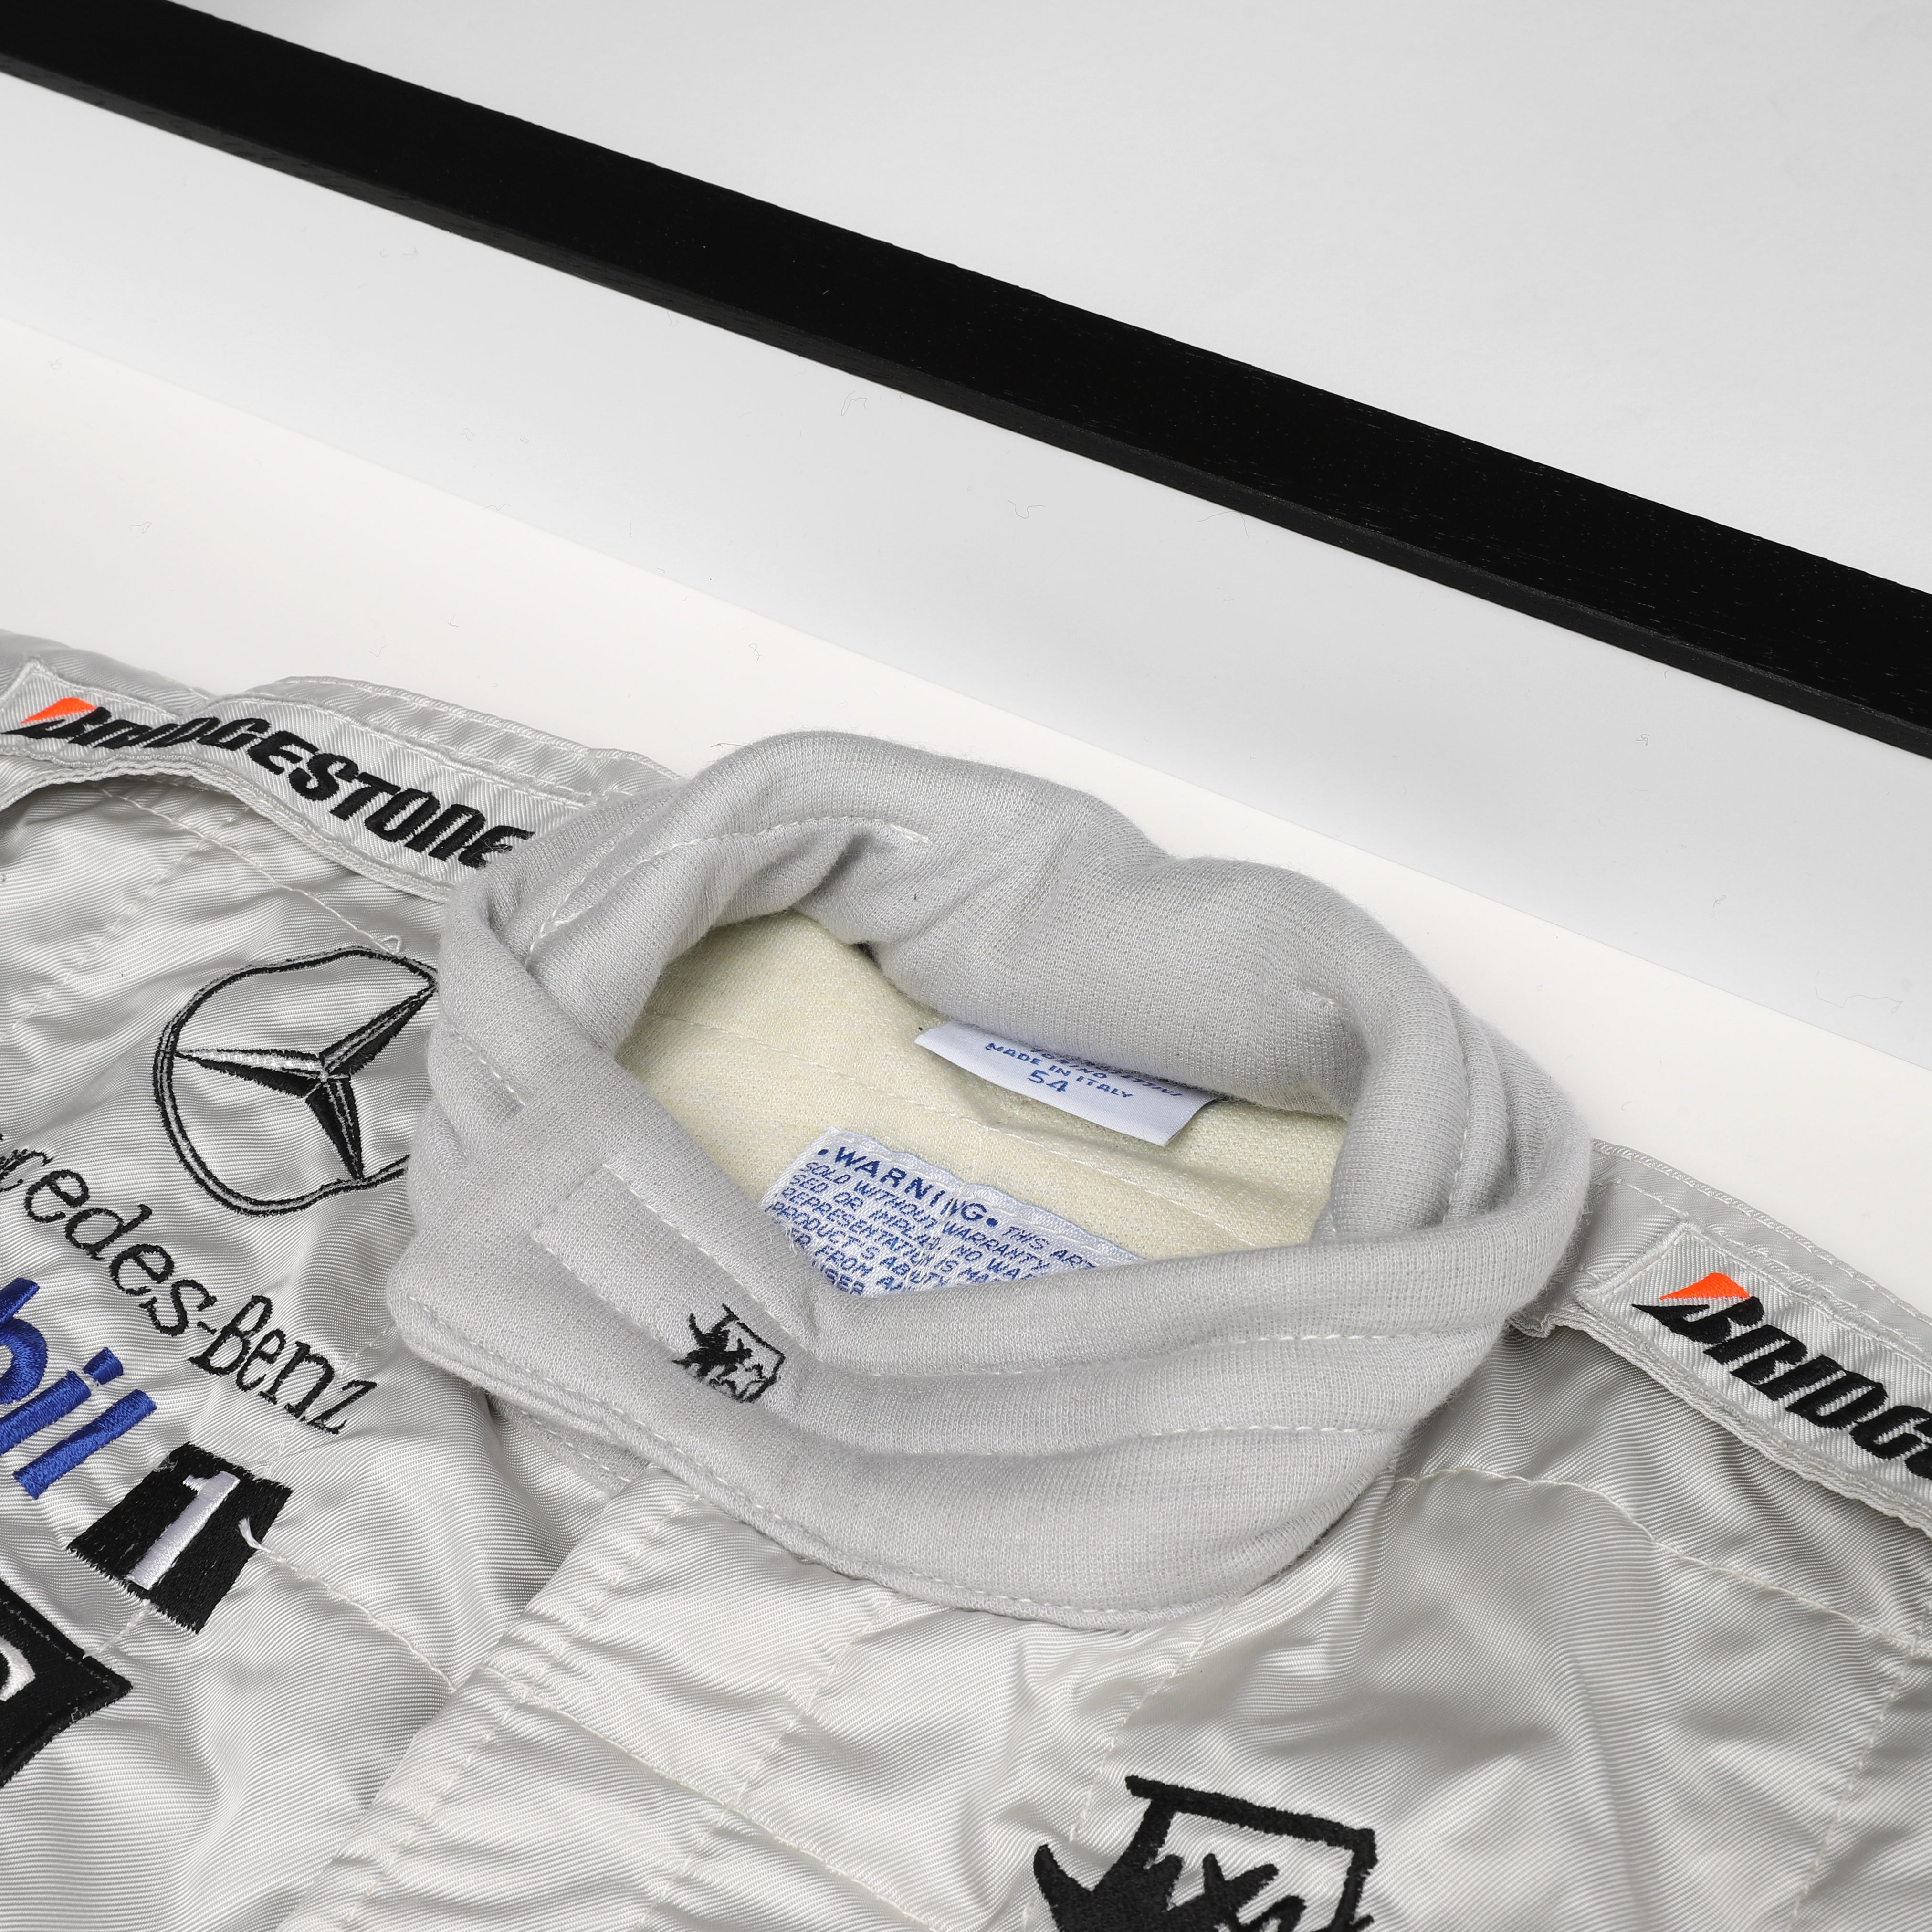 David Coulthard 1998 McLaren F1 Team Replica Race Suit with Mirror Man, Computer Associates & Schweppes Branding